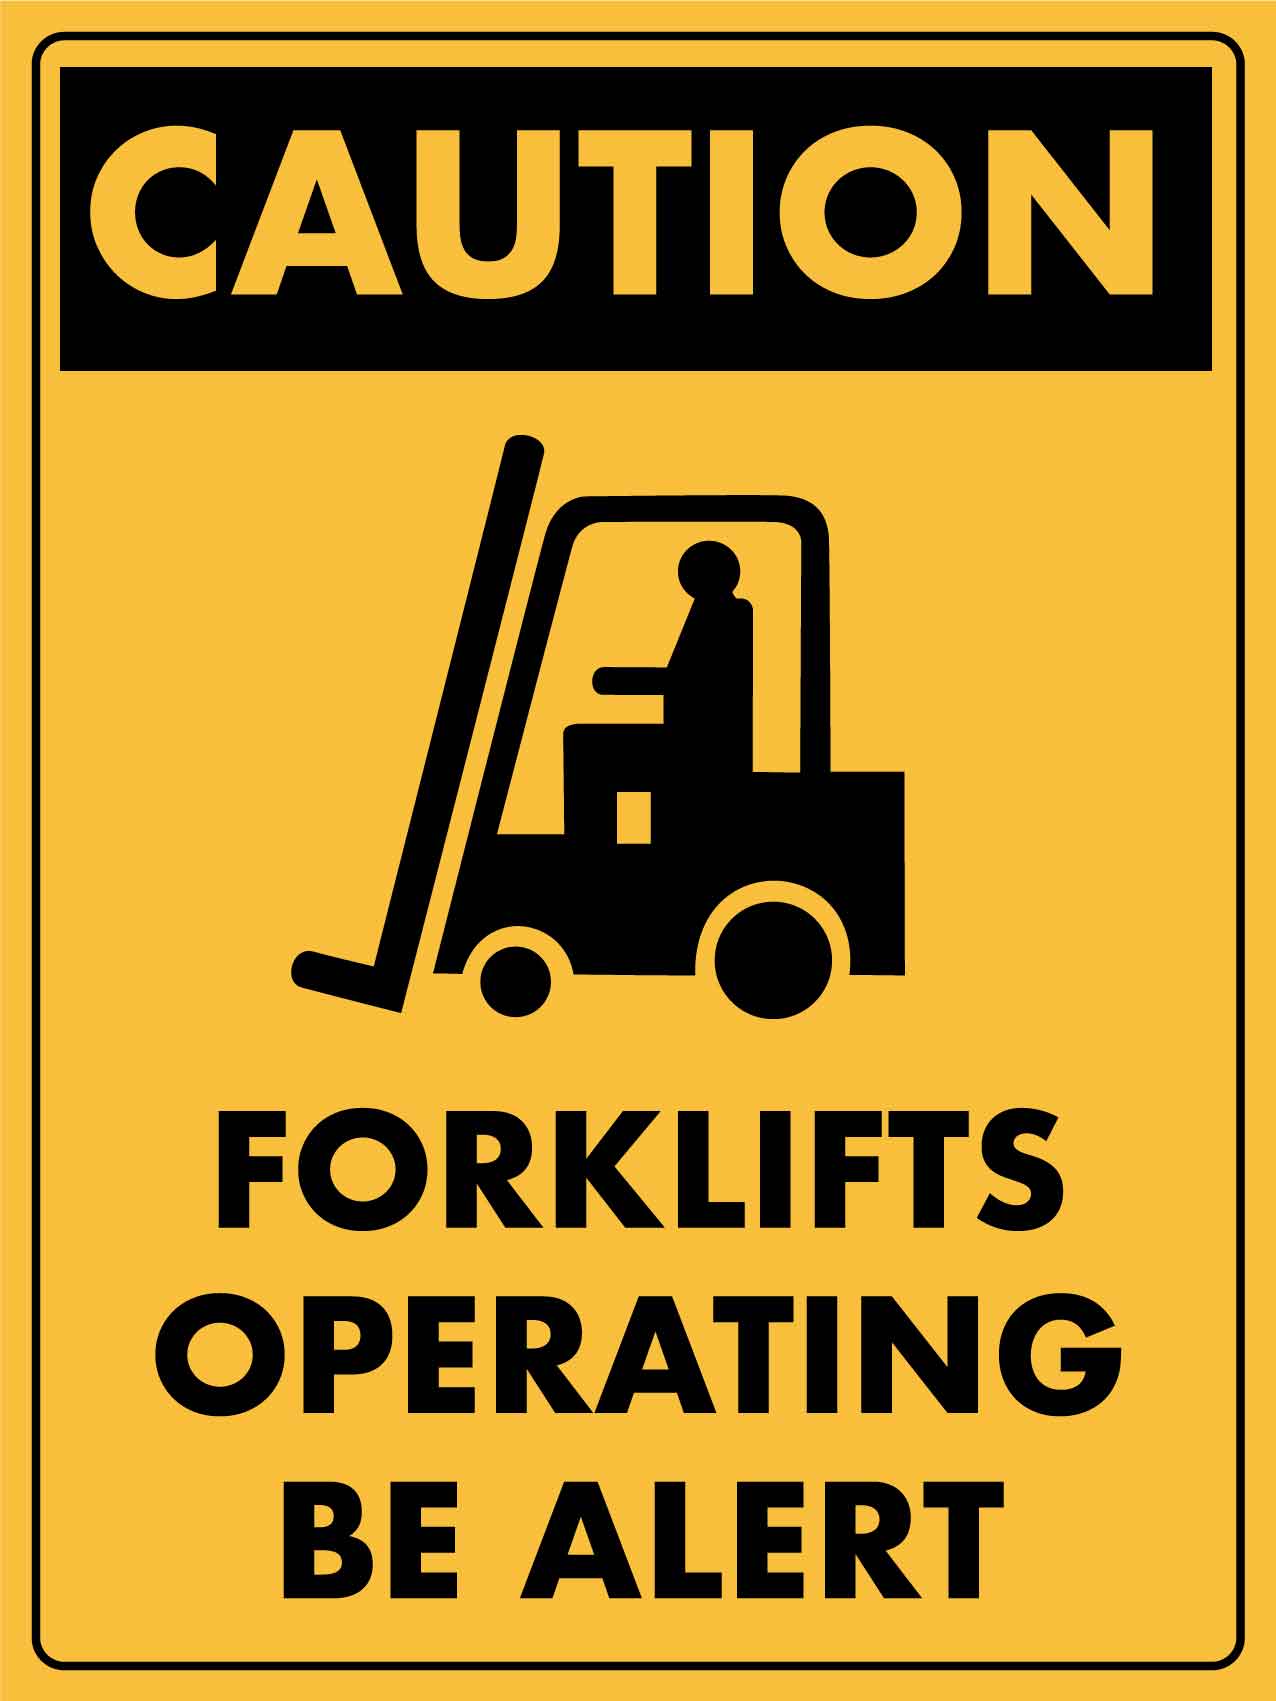 Caution Forklift Operating Be Alert Sign